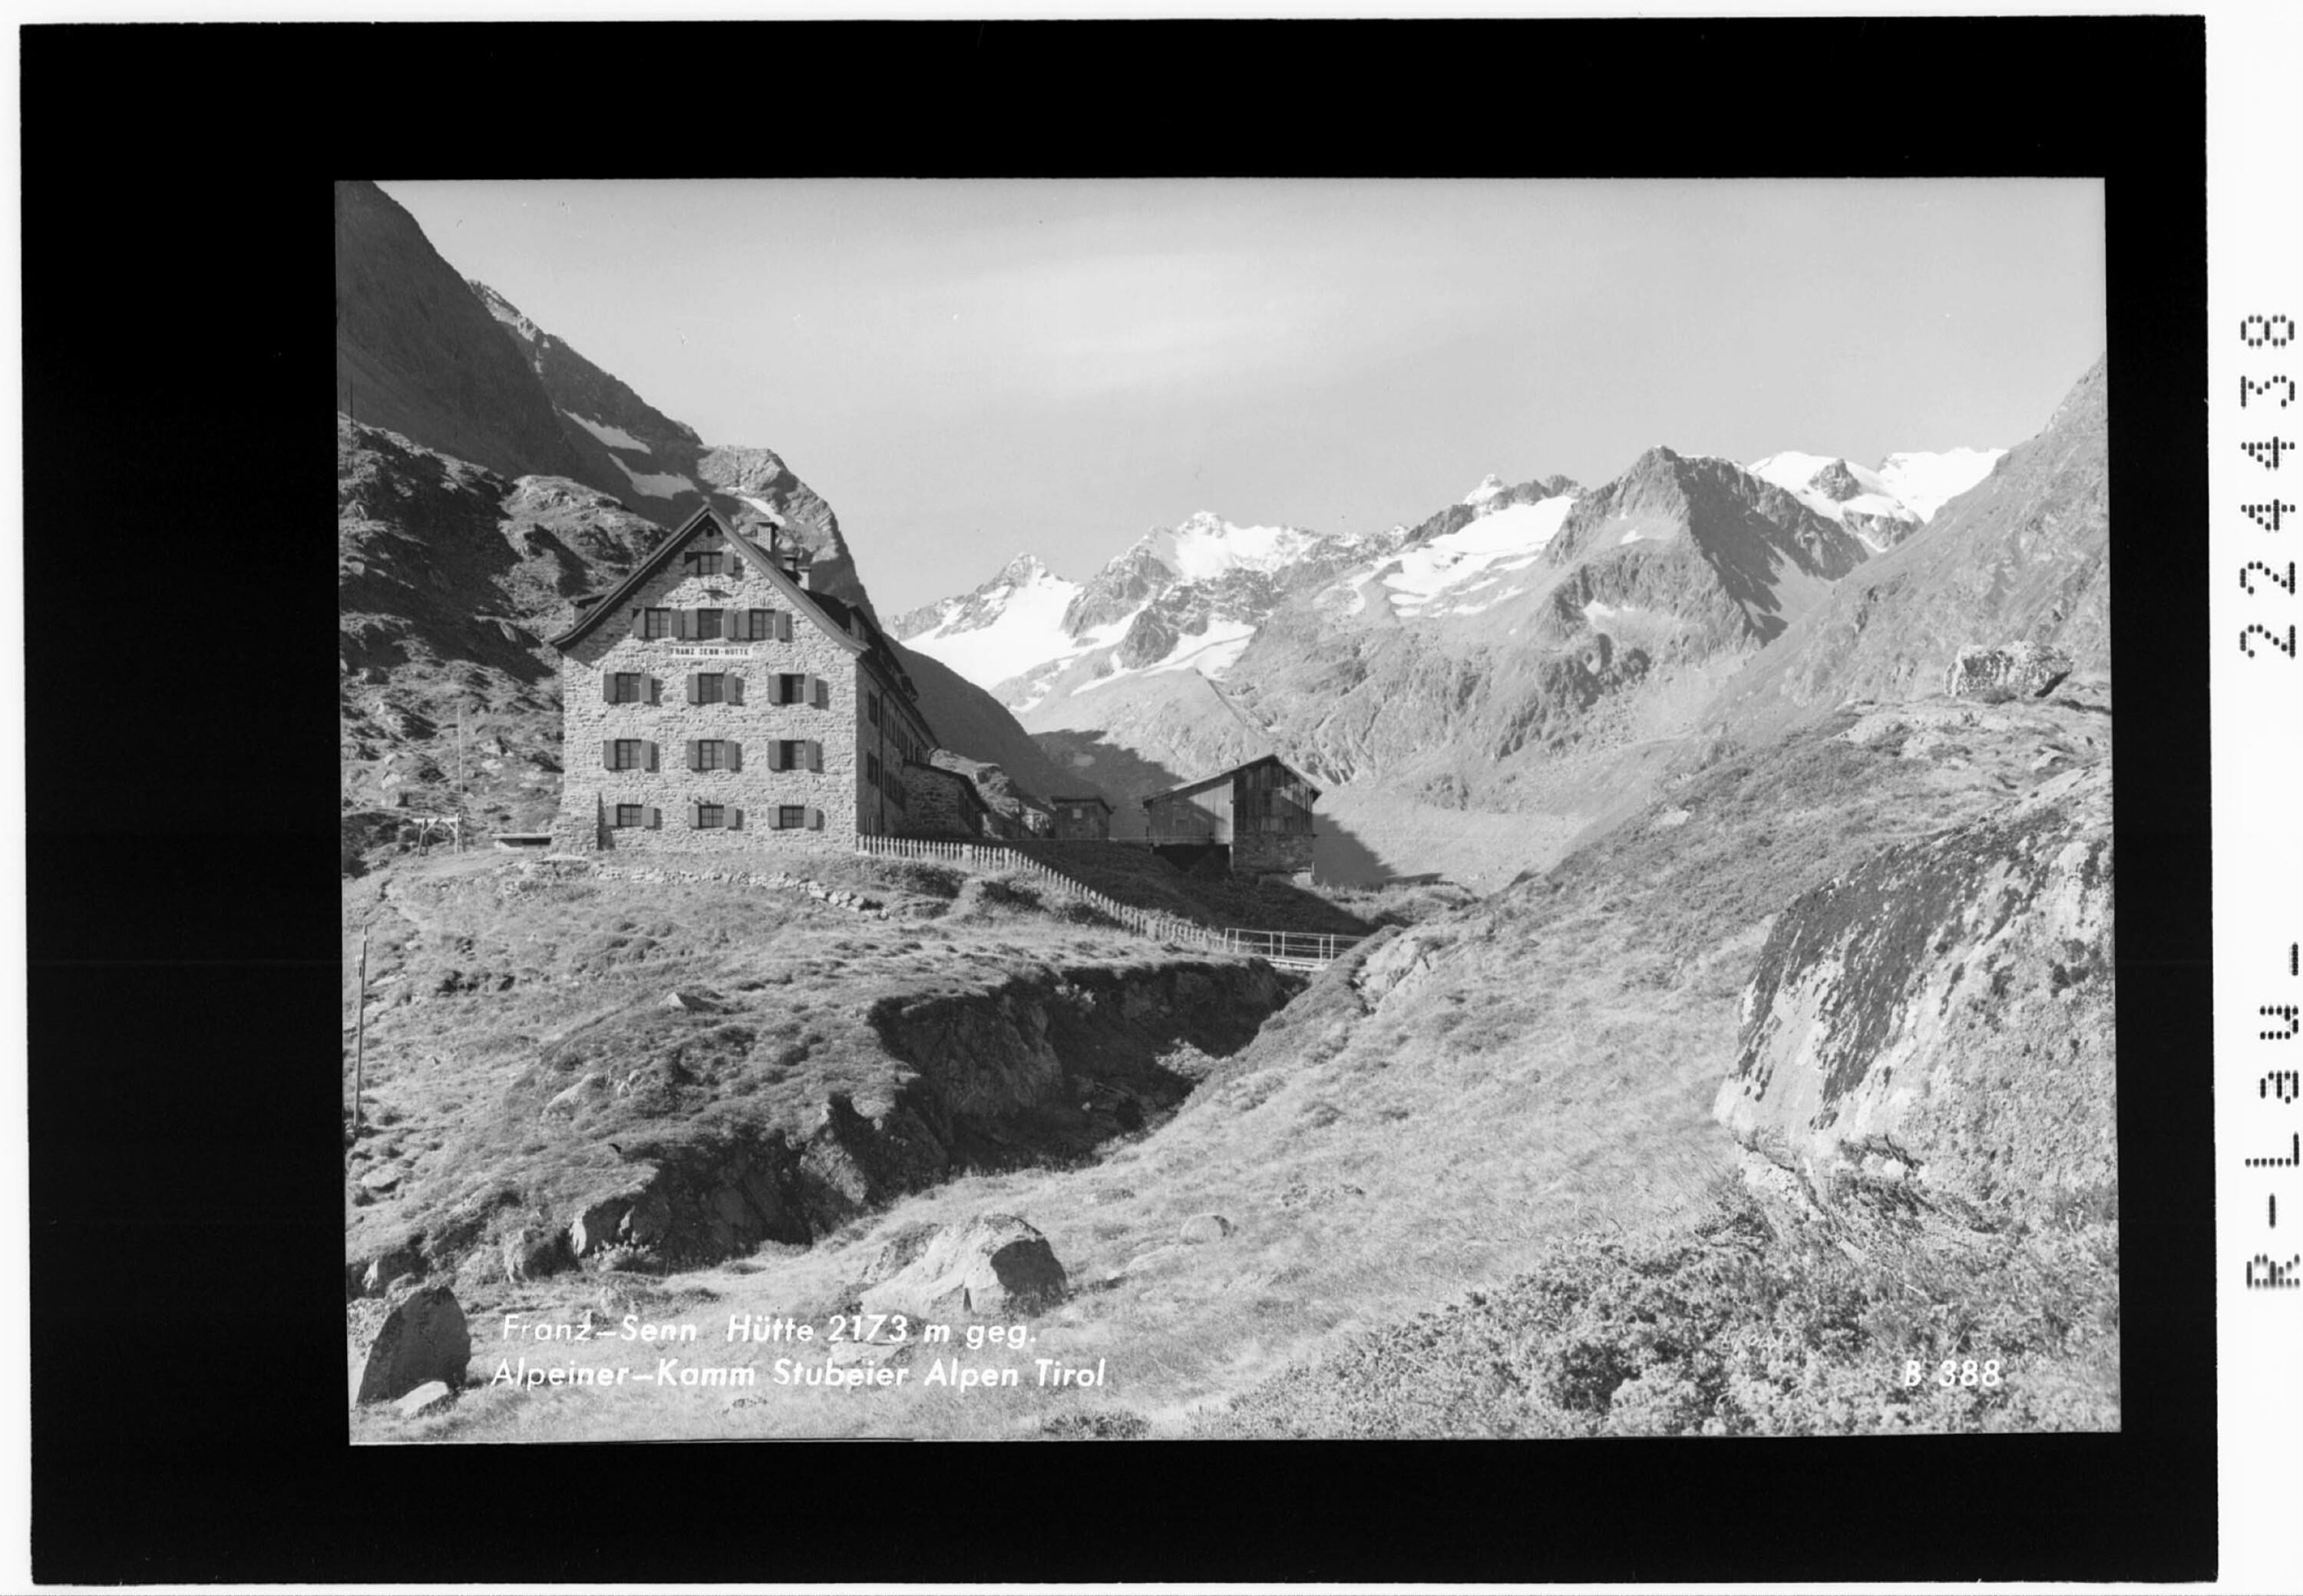 Franz Senn Hütte 2173 m gegen Alpeiner Kamm / Stubaier Alpen></div>


    <hr>
    <div class=